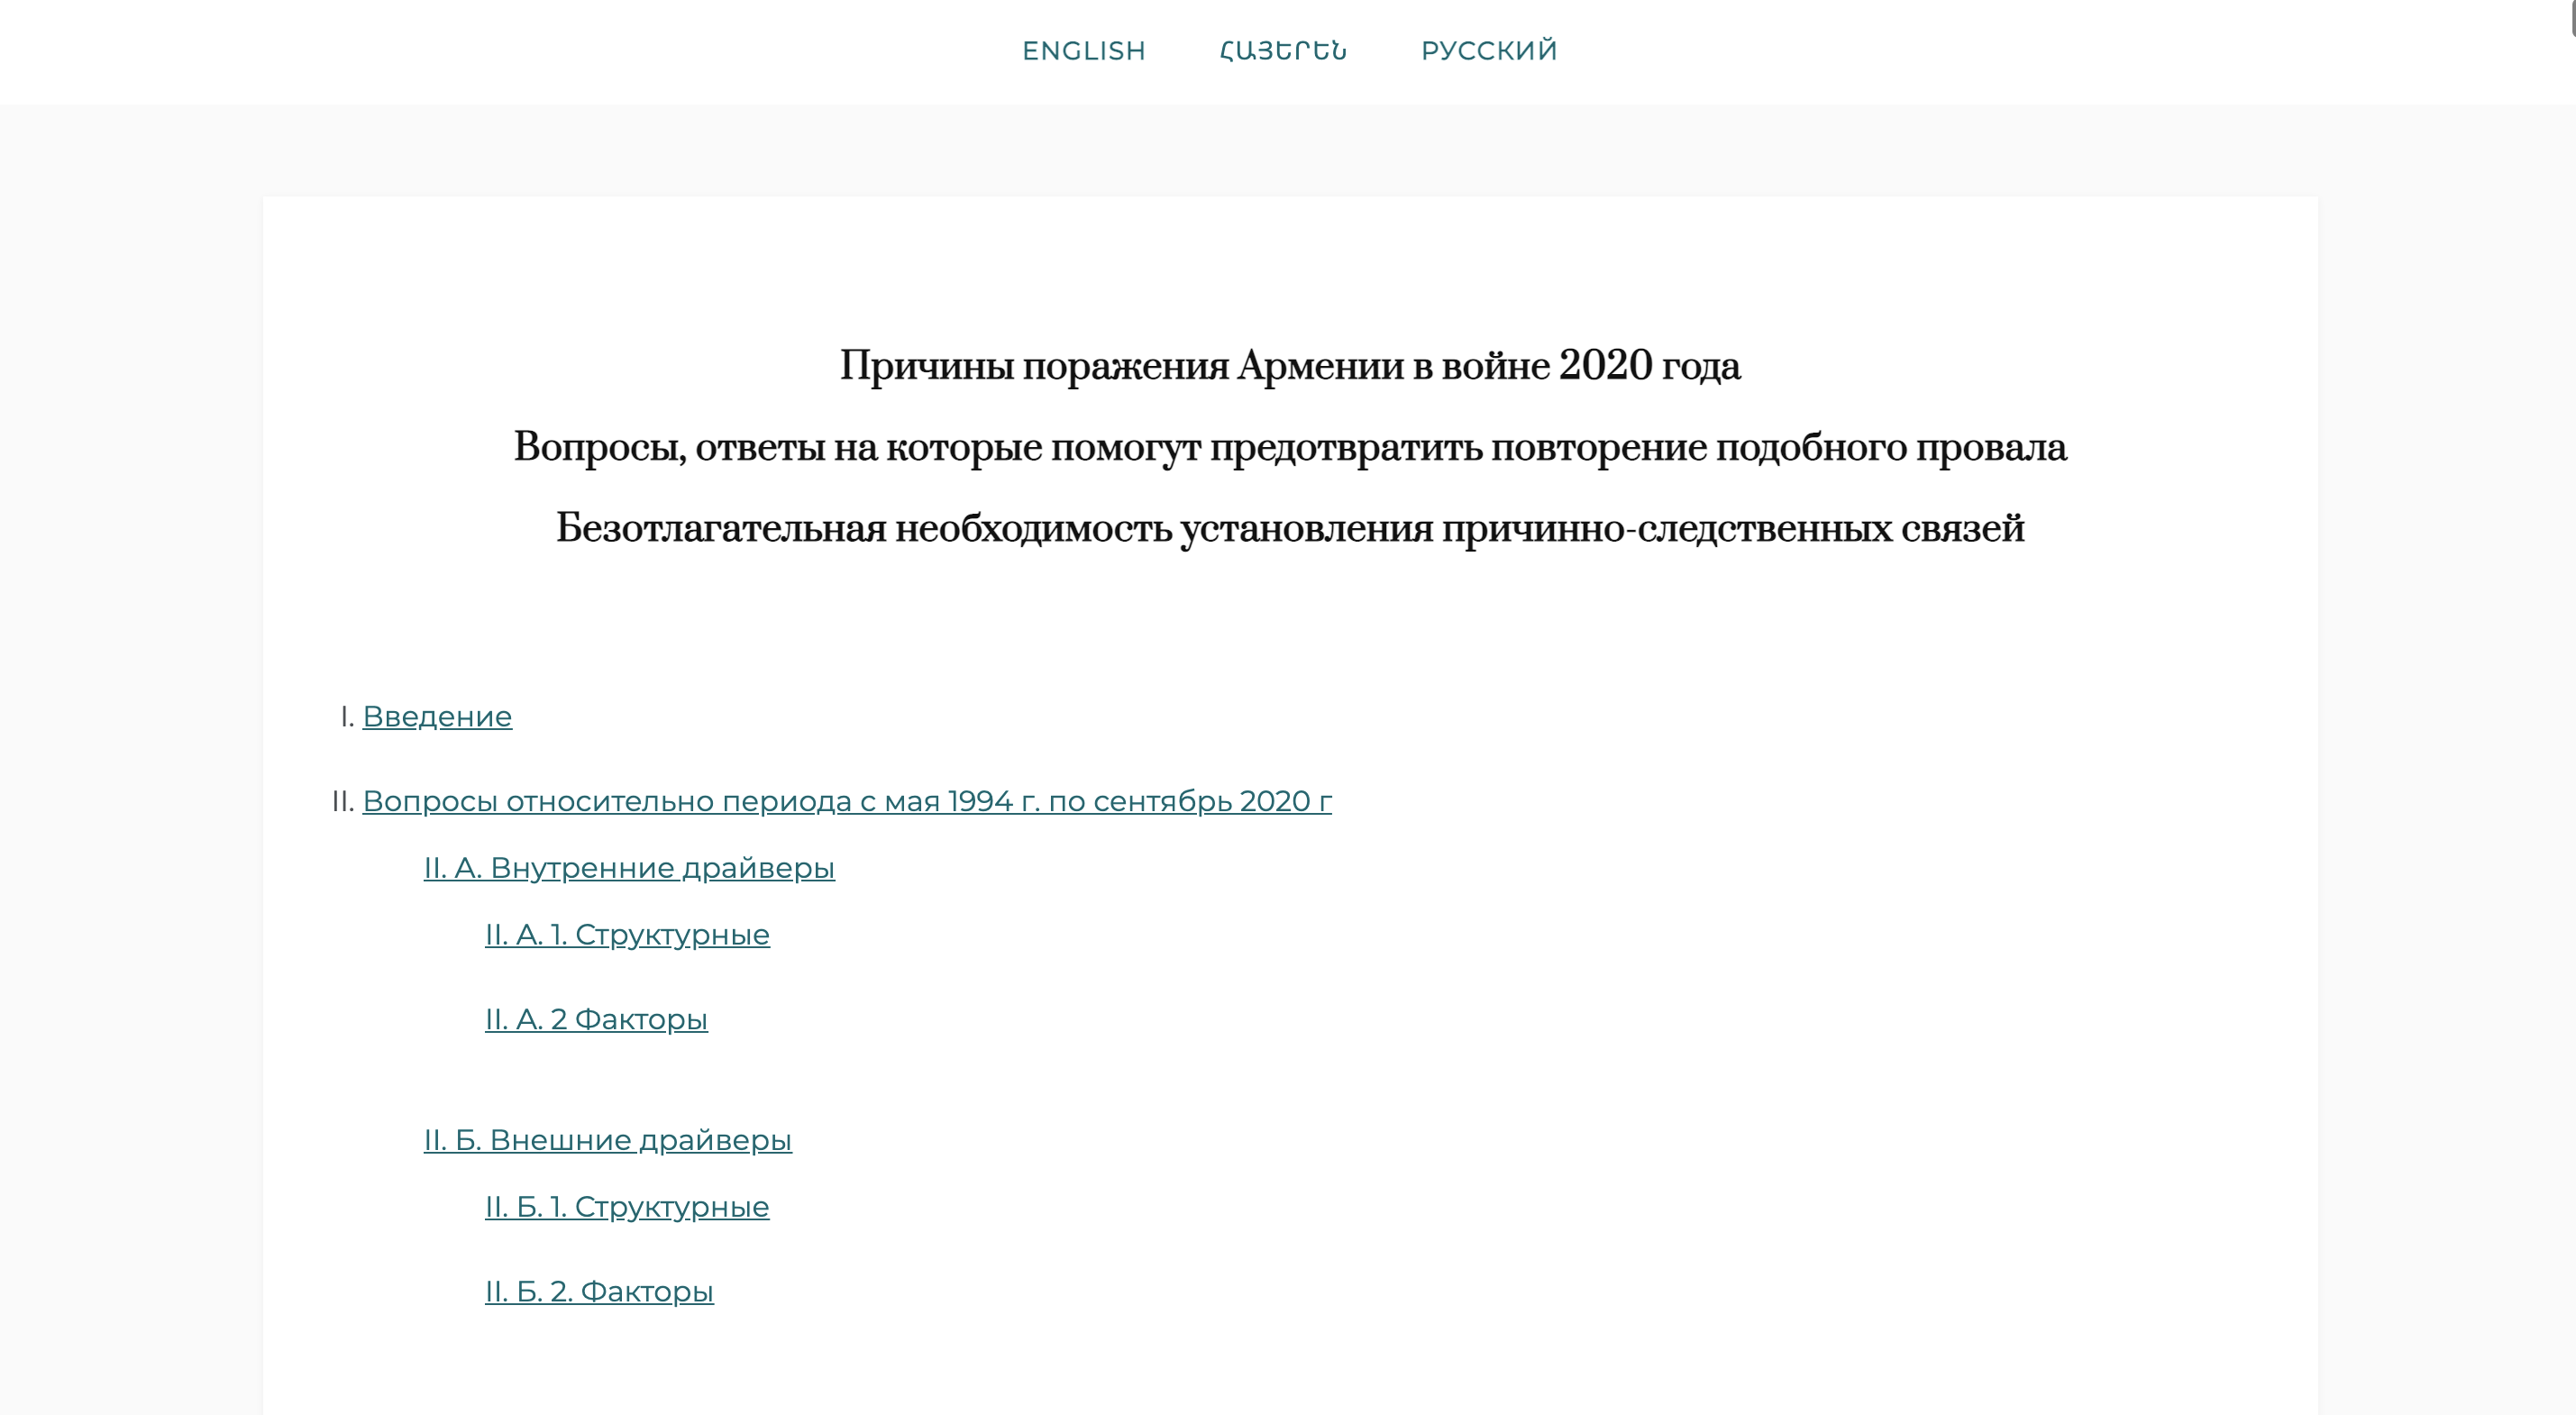 Armenia Commission - Homepage